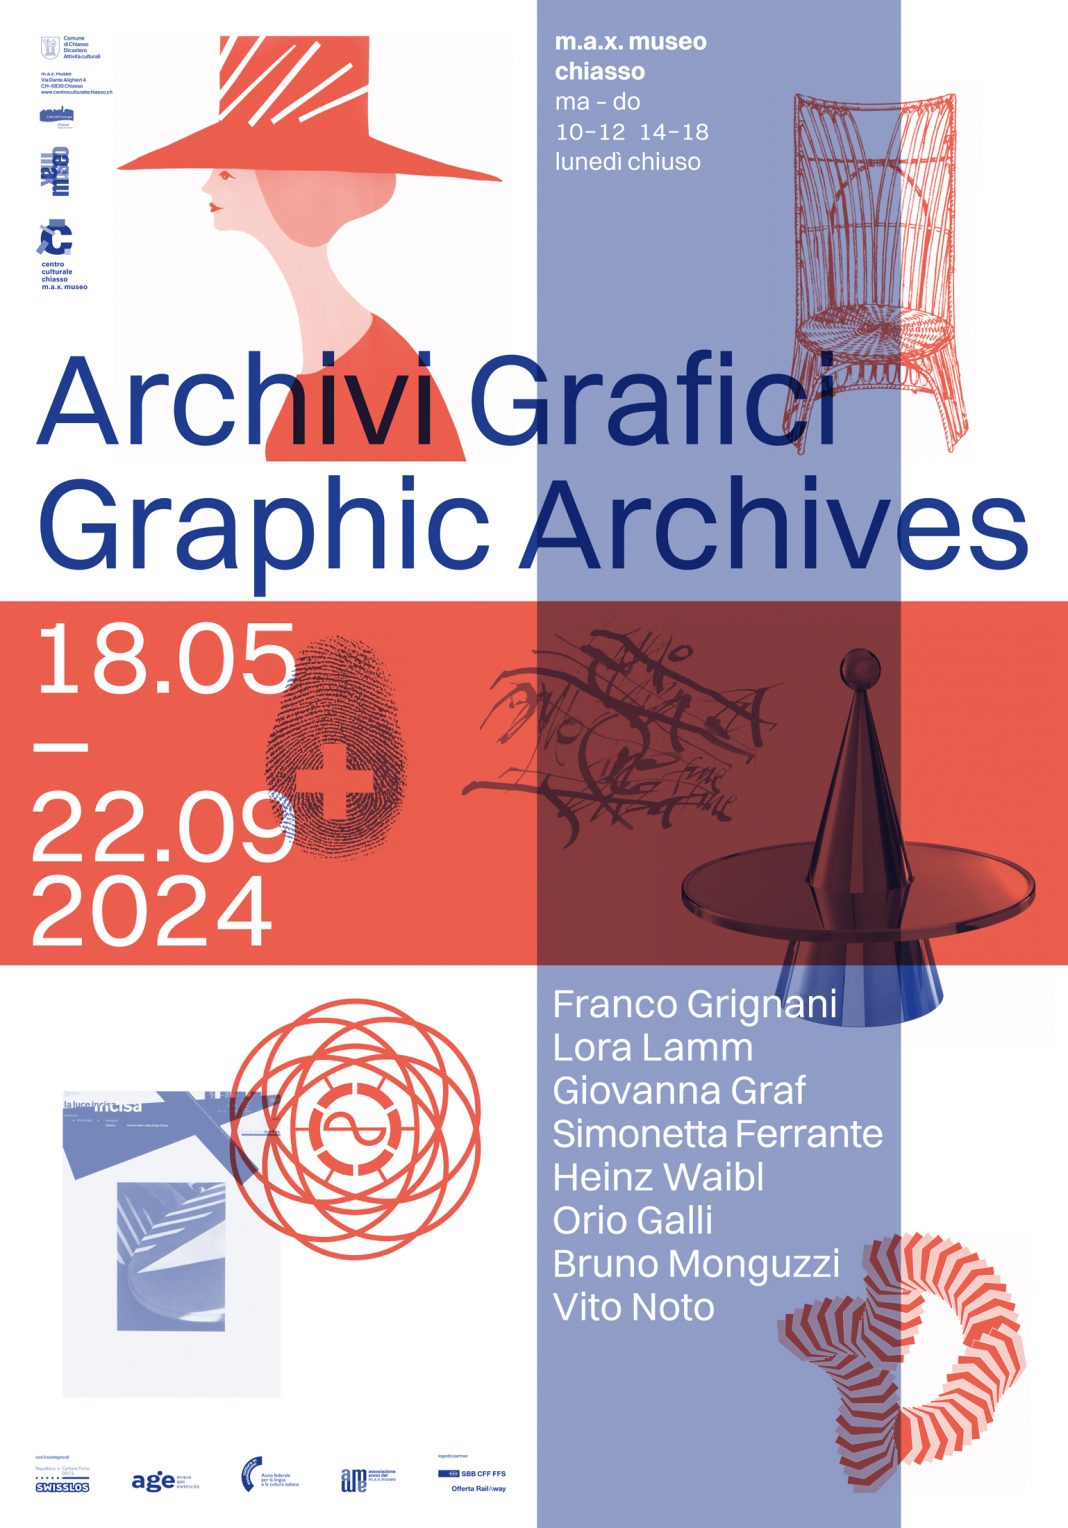 Archivi Grafici / Graphic Archives: Franco Grignani, Lora Lamm, Giovanna Graf, Simonetta Ferrante, Heinz Waibl, Bruno  Monguzzi, Orio Galli, Vito Notohttps://www.exibart.com/repository/media/formidable/11/img/917/EXE_F4_Manifesti-Archivi-1068x1528.jpg